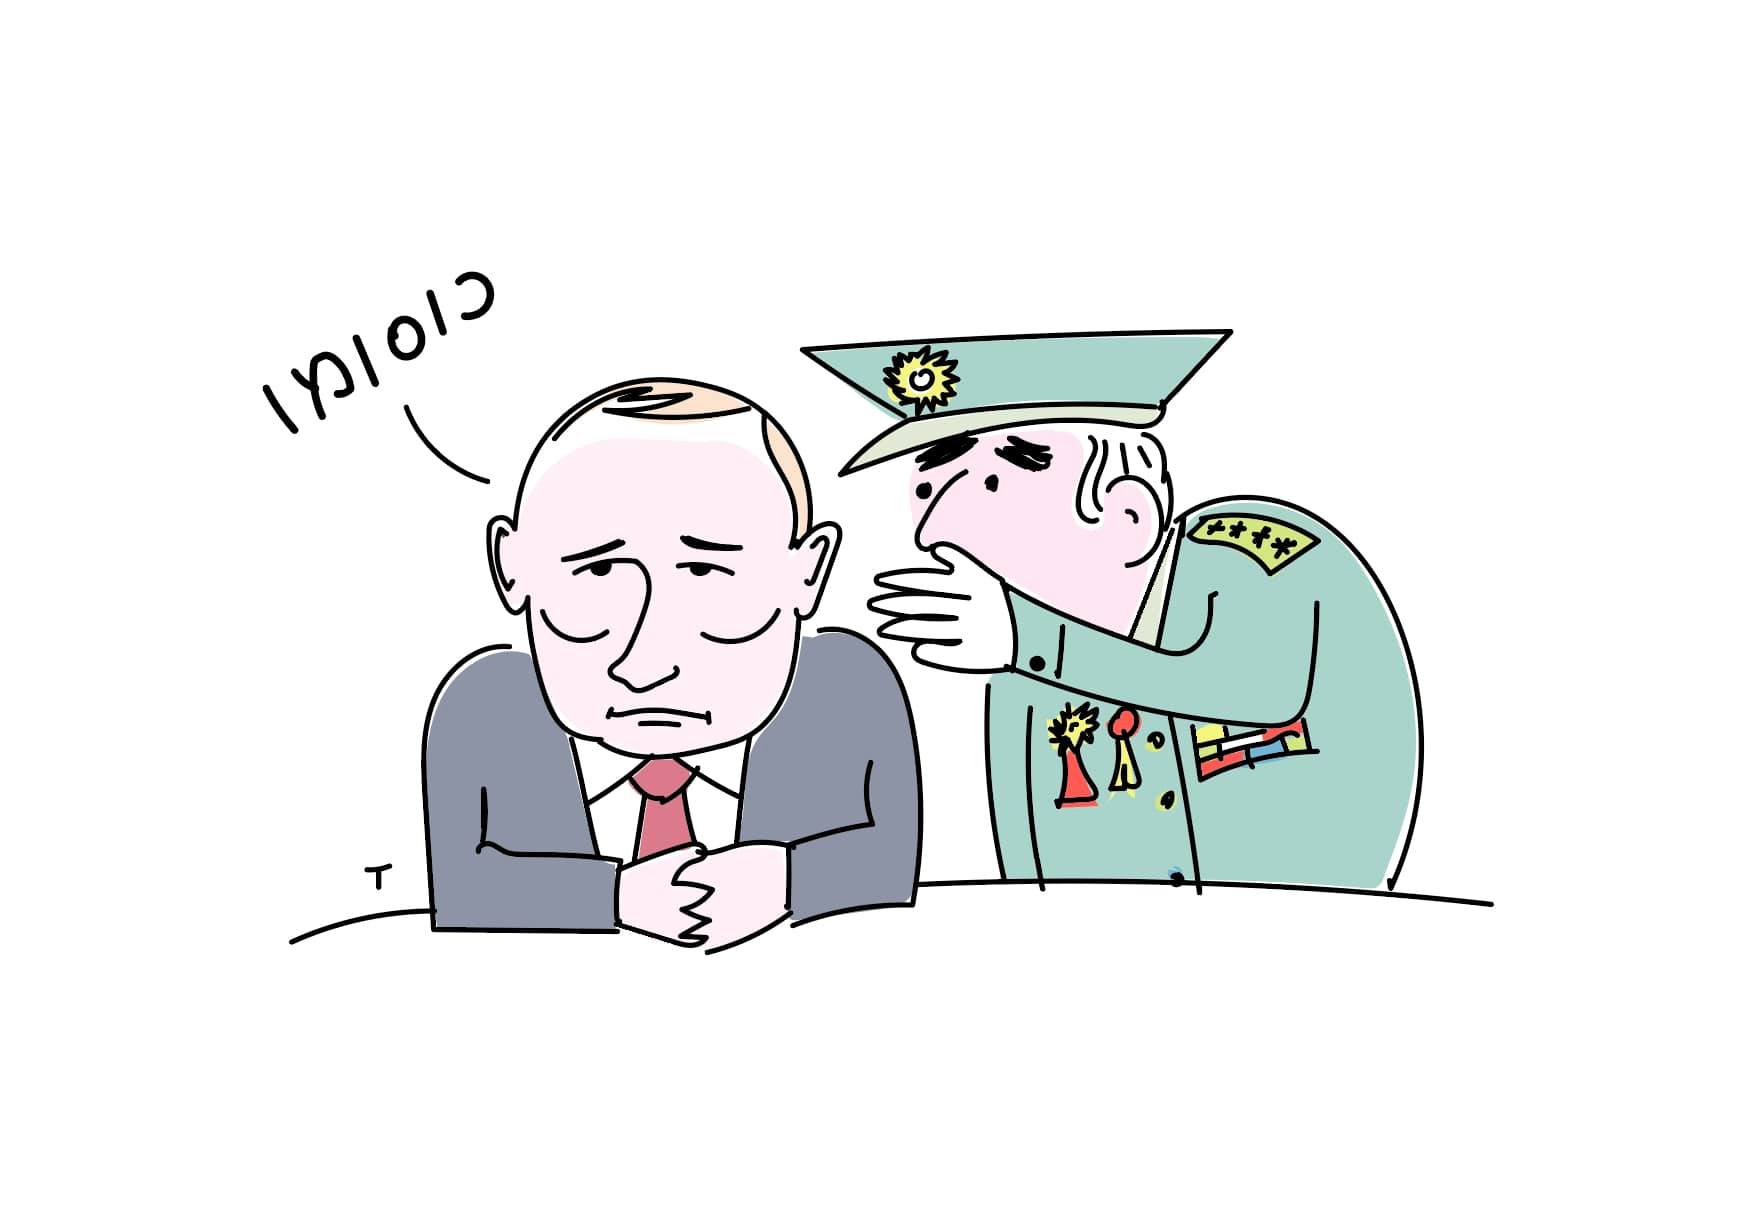 Putin #1/3